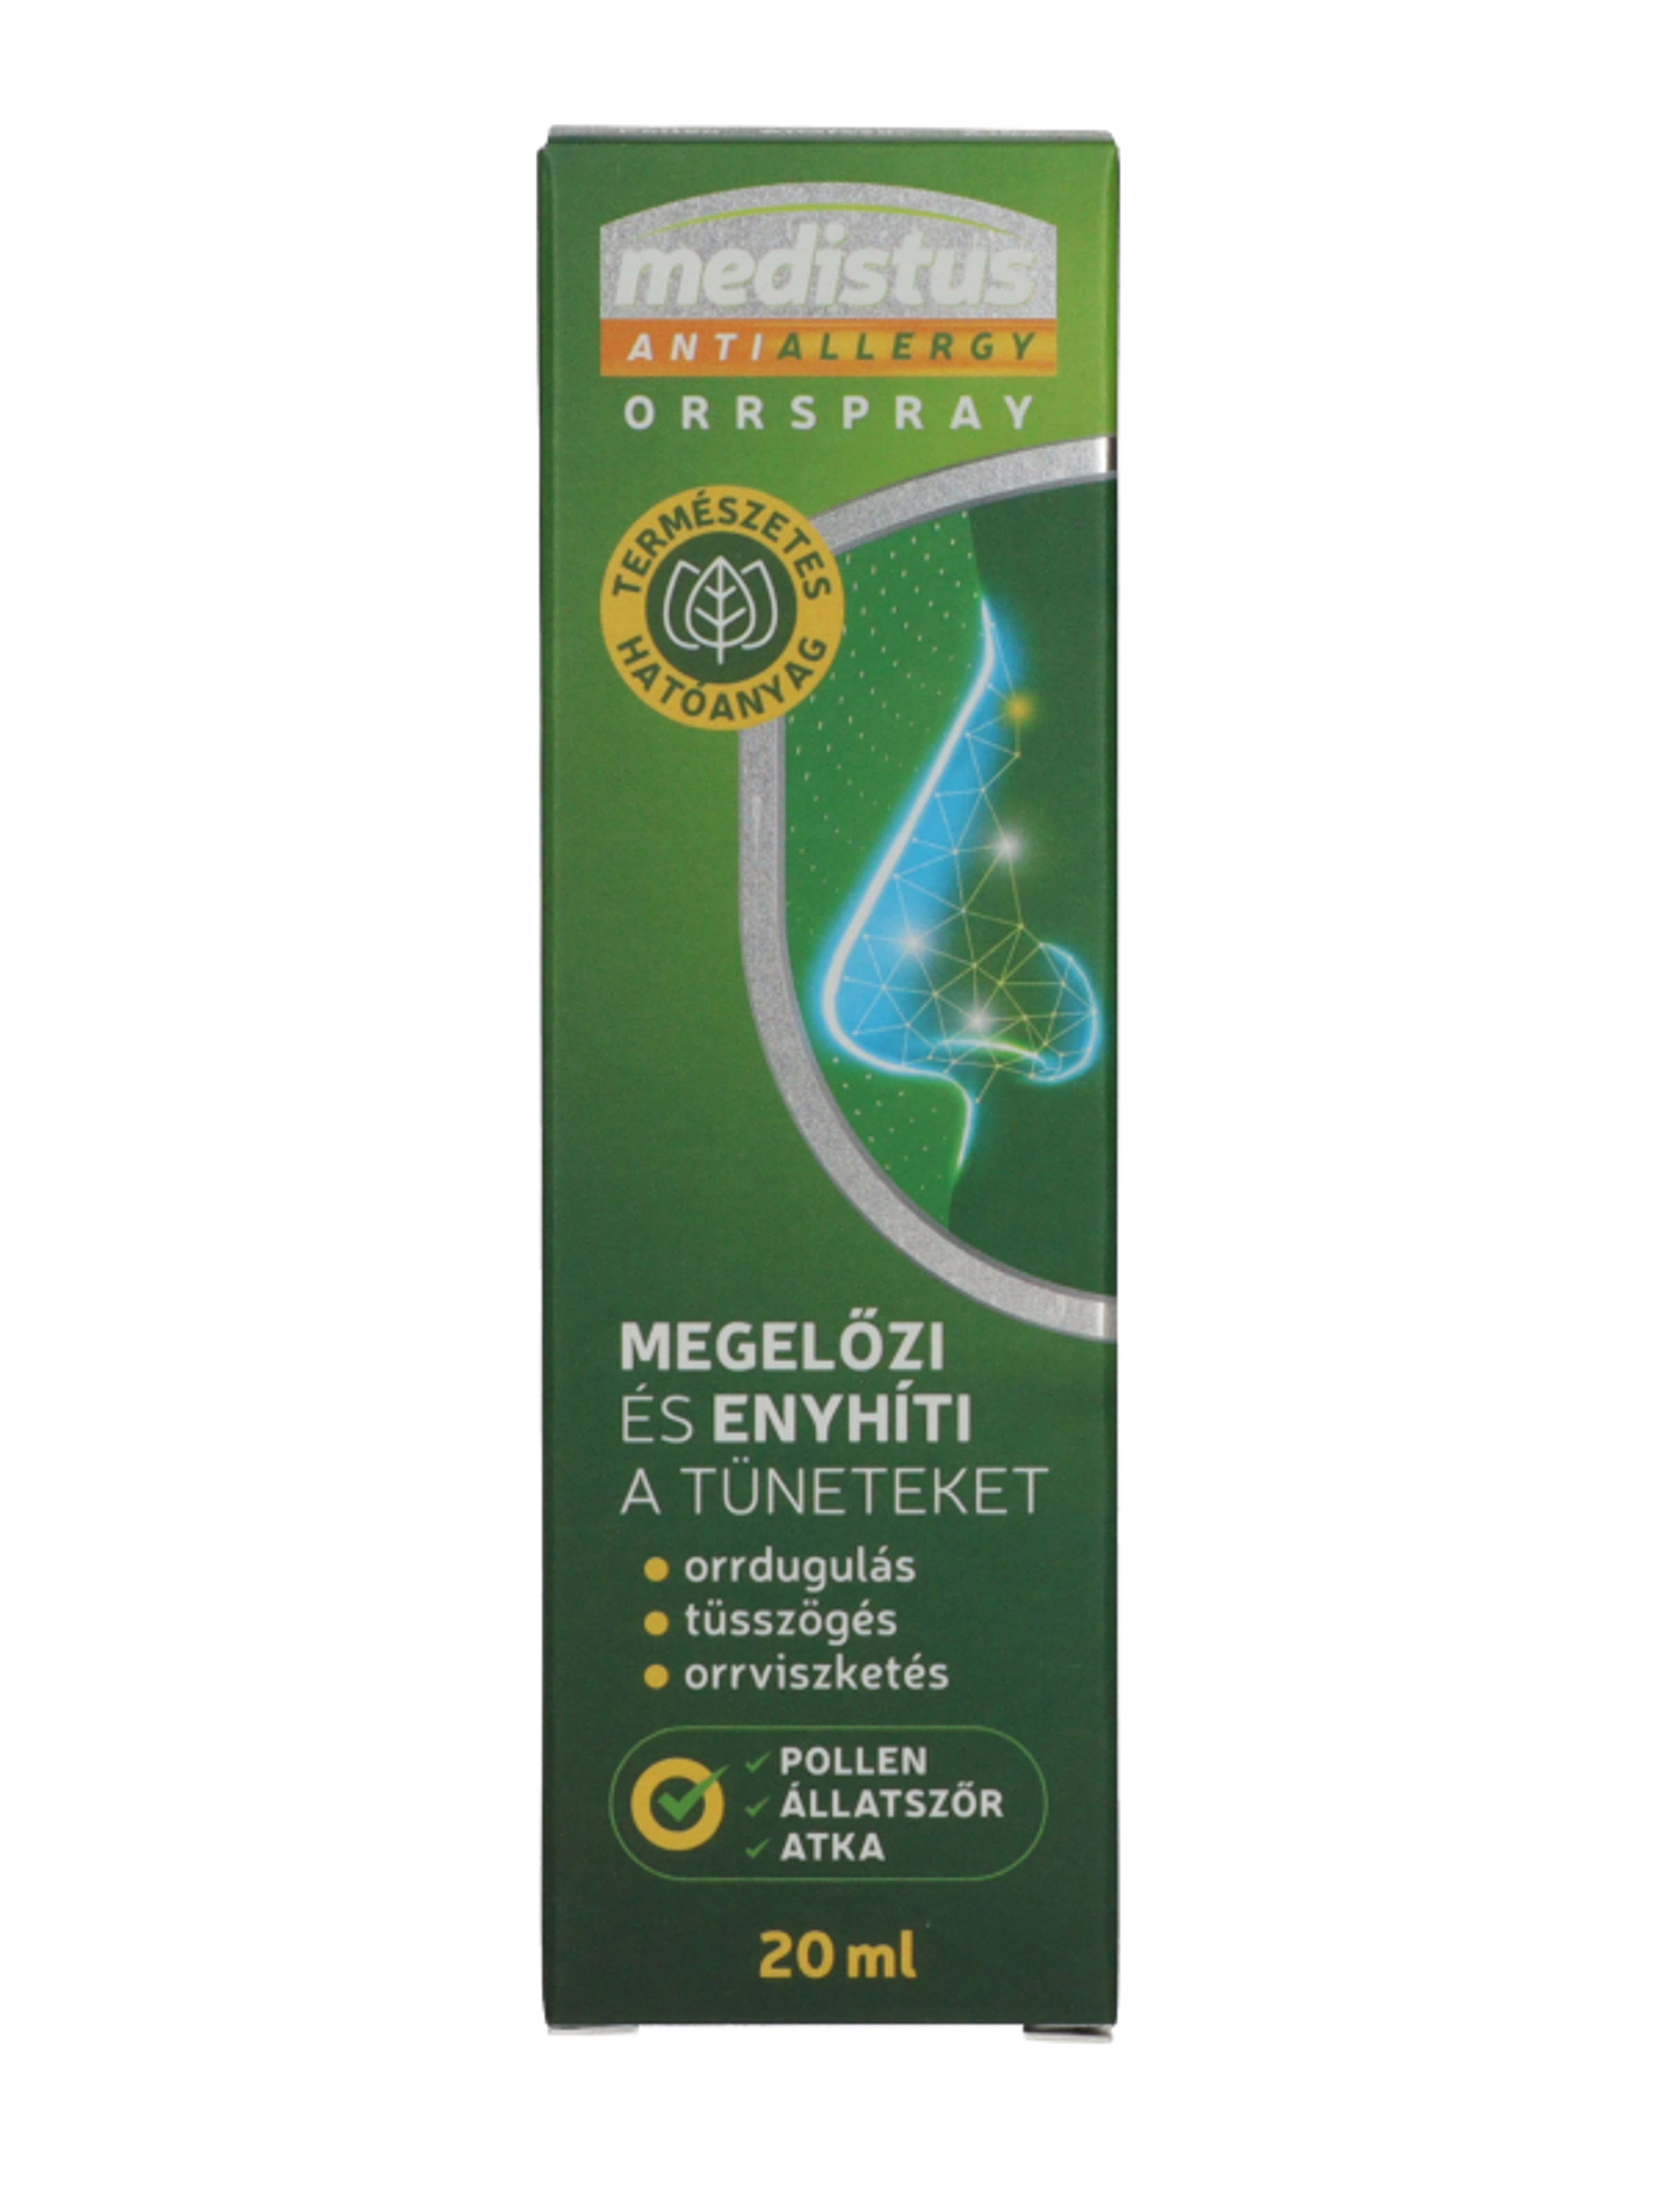 Medistus AntiAllergy orrspray - 20 ml-1